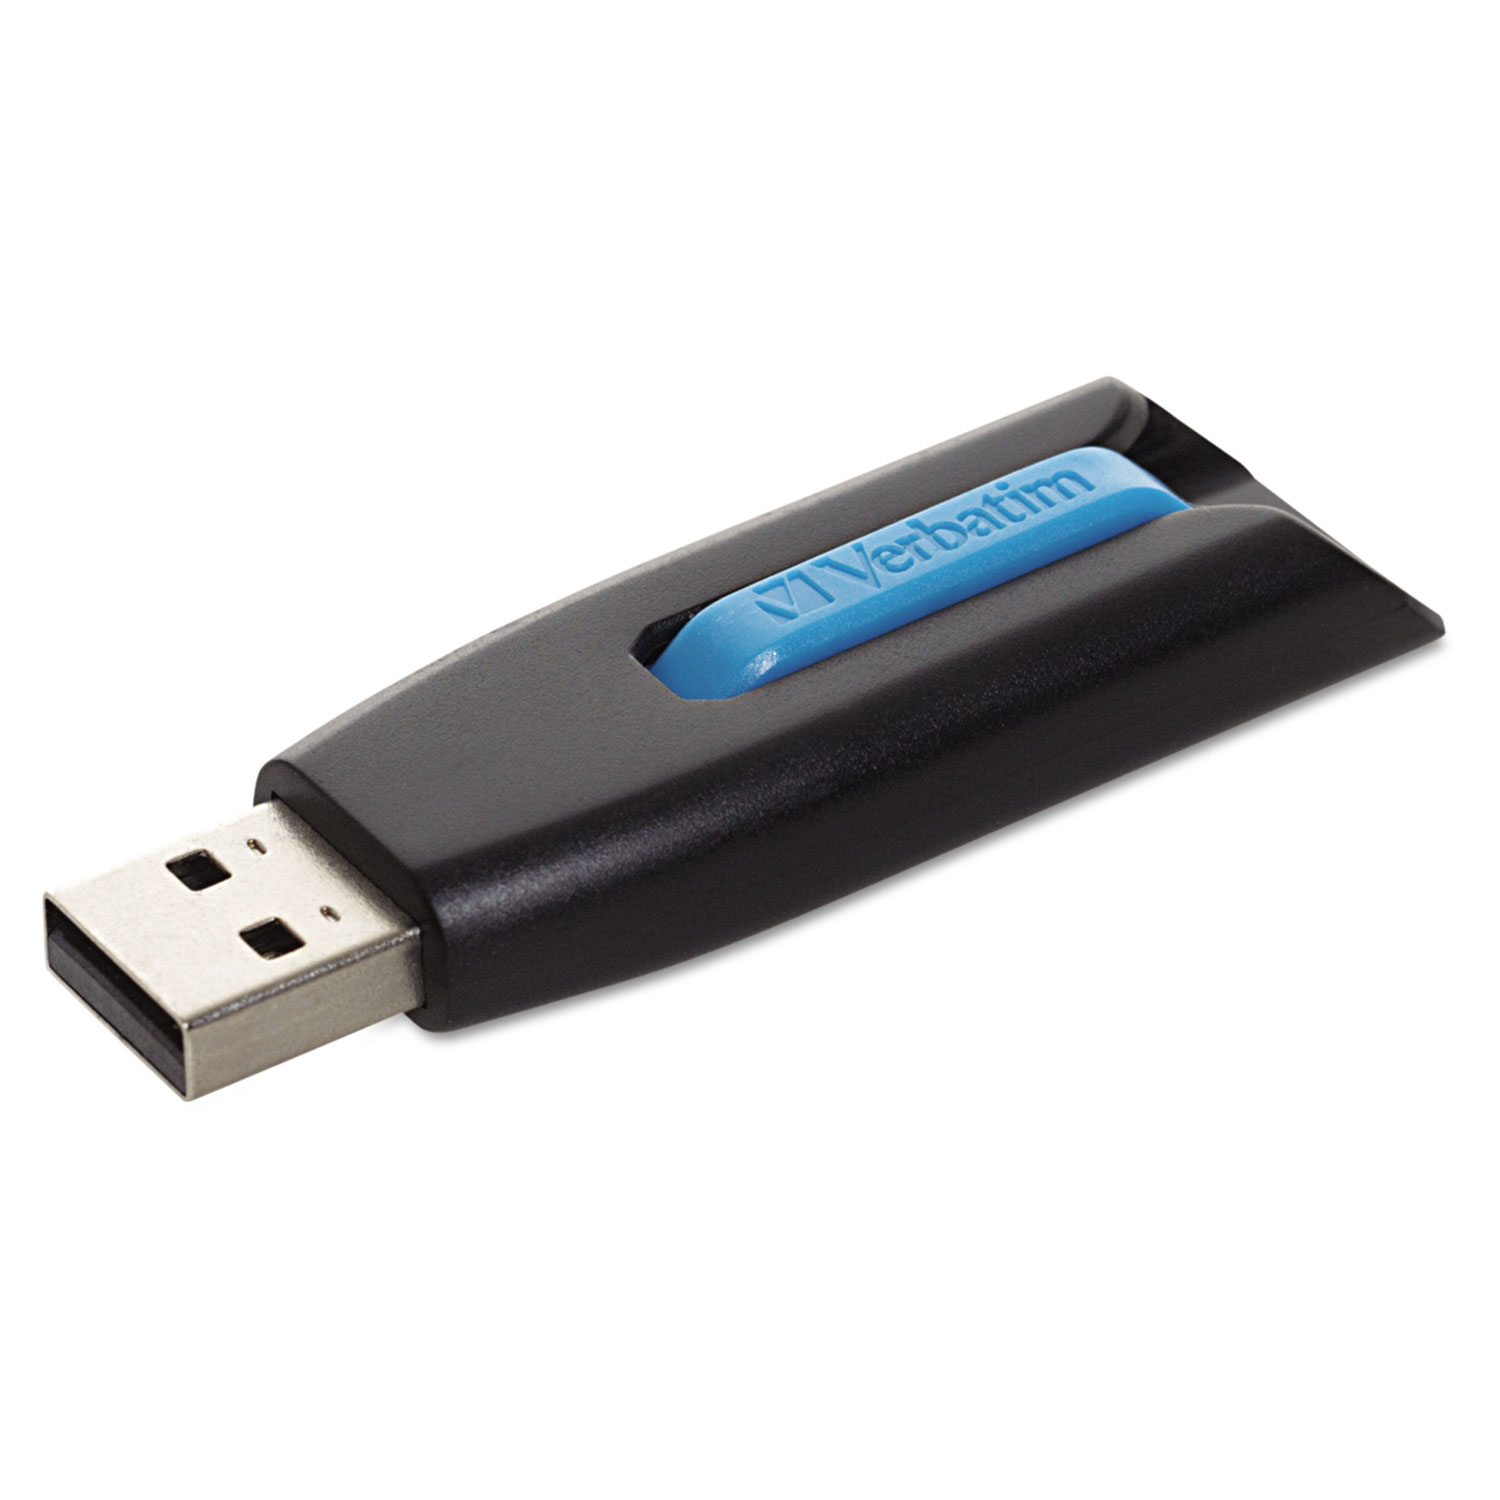  Verbatim 49176 Store 'n' Go V3 USB 3.0 Drive, 16 GB, Black/Blue (VER49176) 